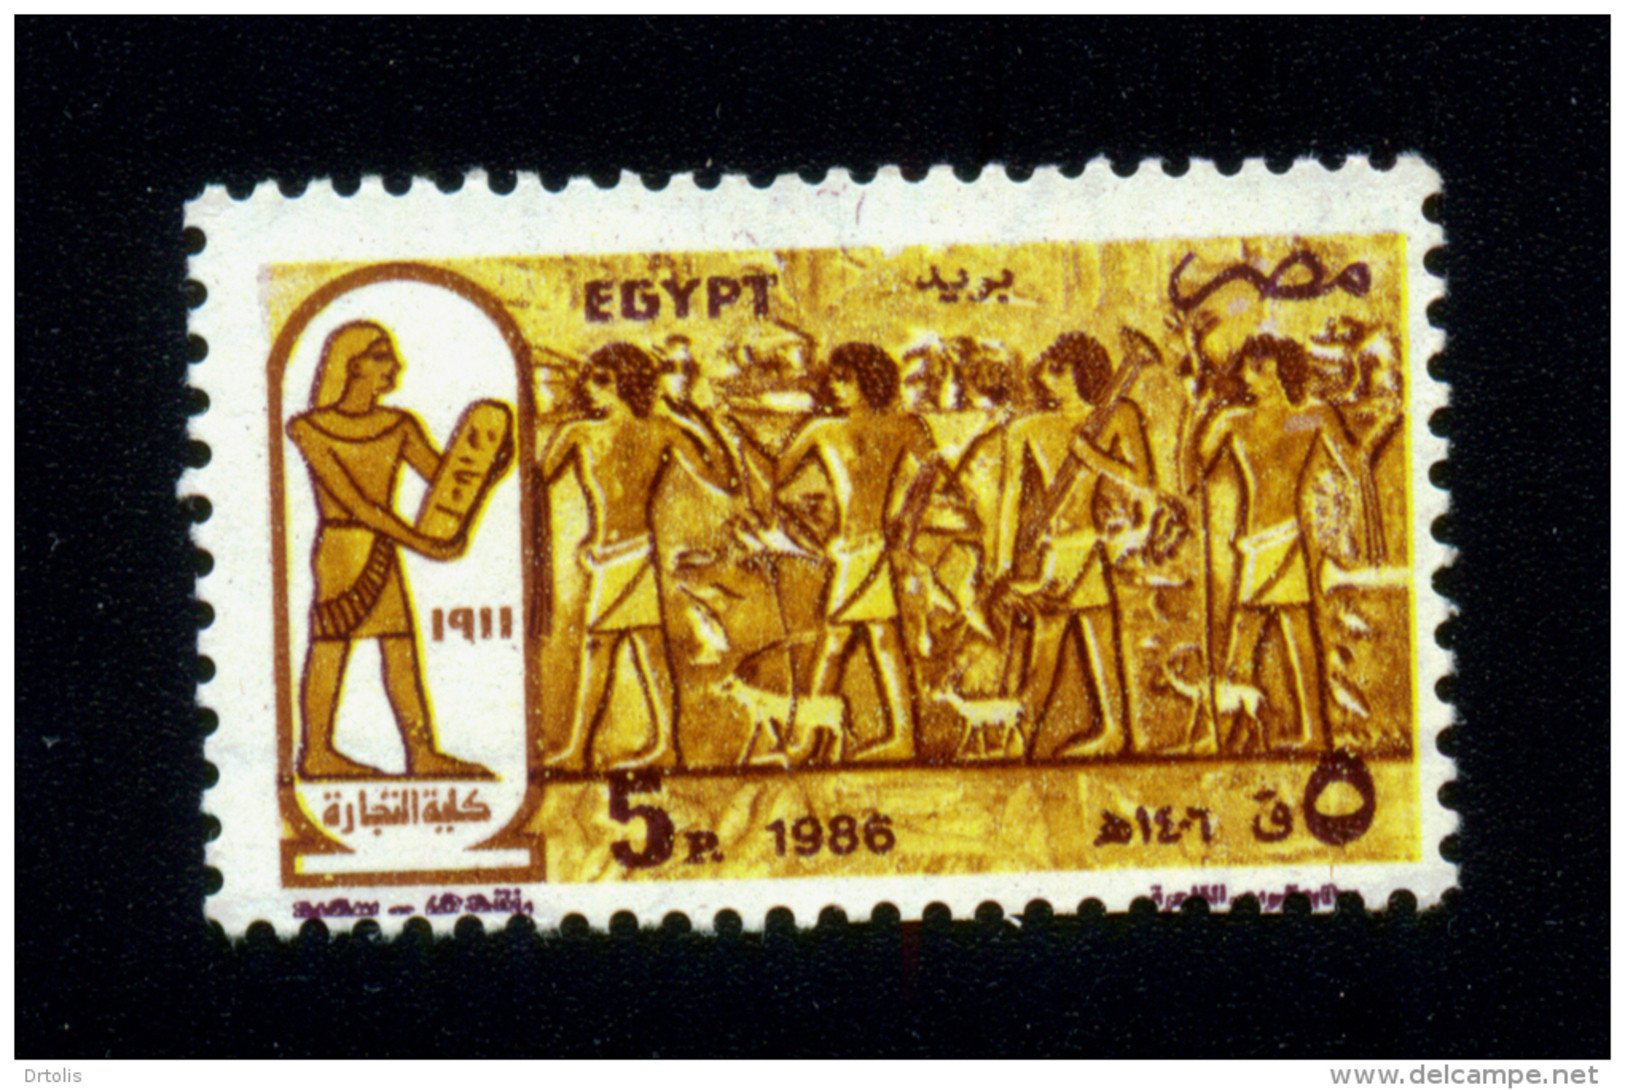 EGYPT / 1986 / FACULTY OF COMMERCE ; CAIRO UNIVERSITY / TOMB PAINTING ( BTAHHOTTEB ) ; SAKKARA / MNH / VF - Nuovi